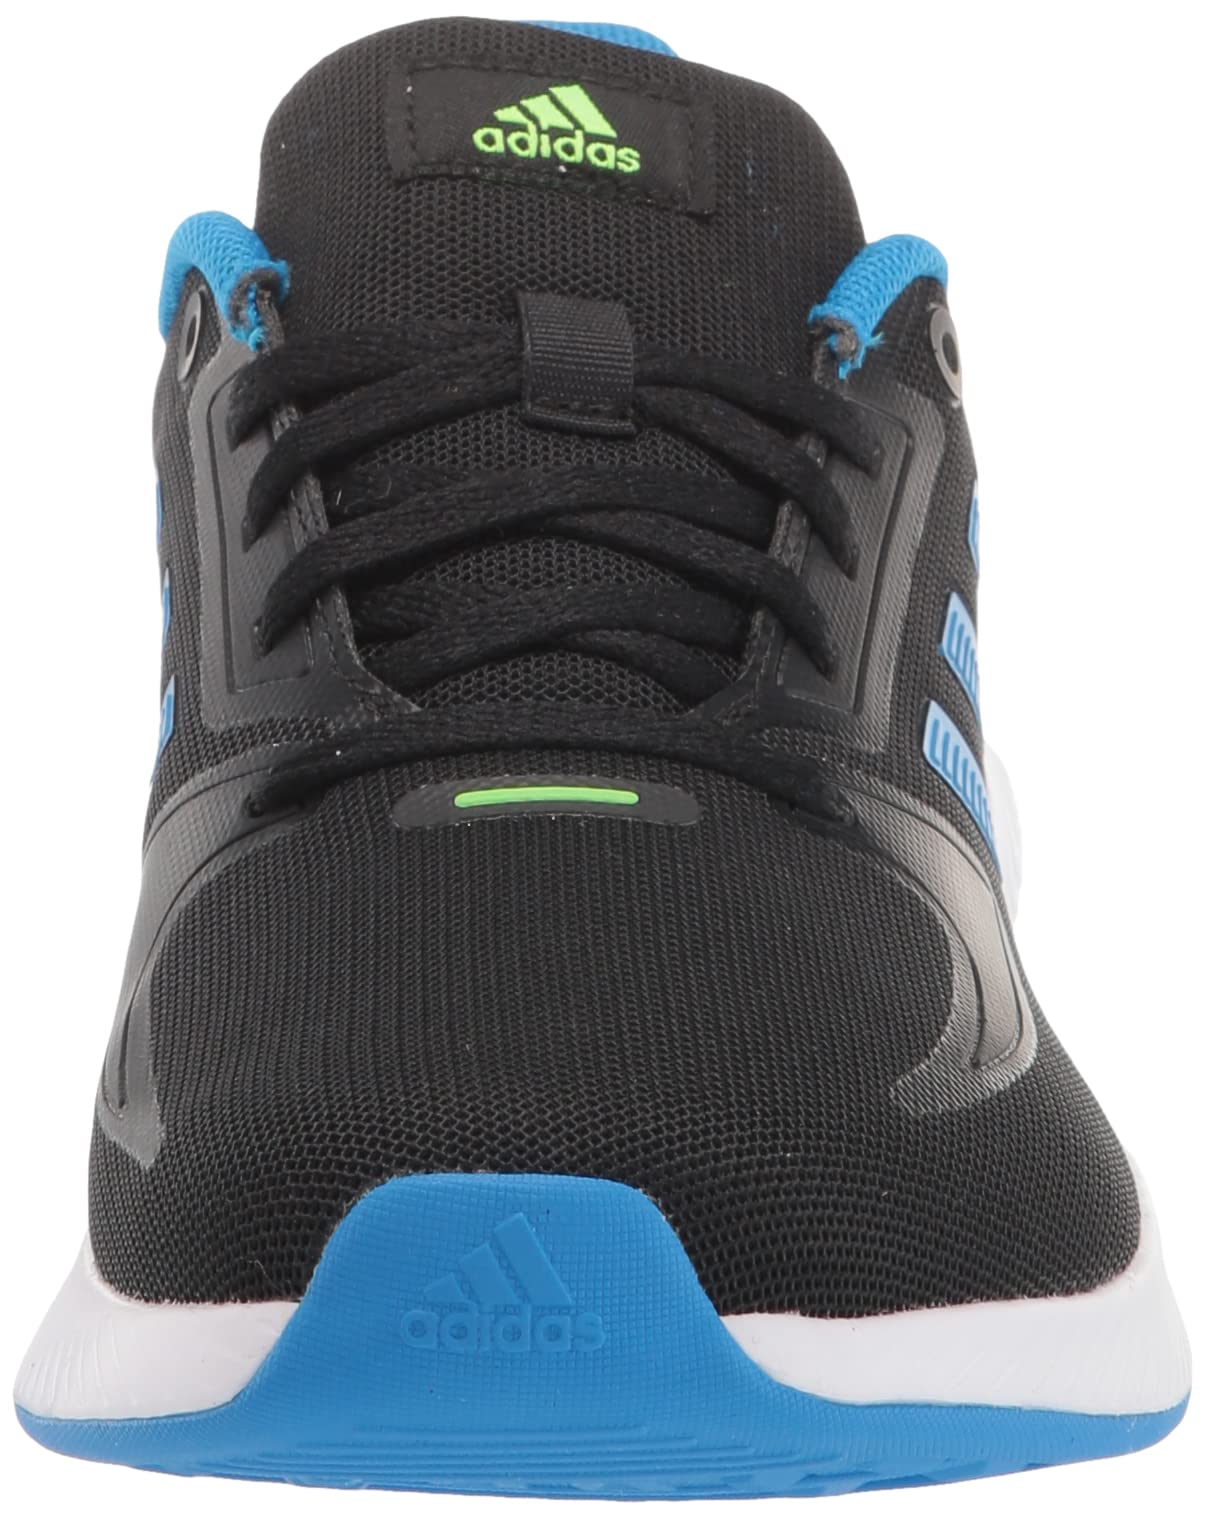 adidas Unisex-Child Runfalcon 2.0 Running Shoe